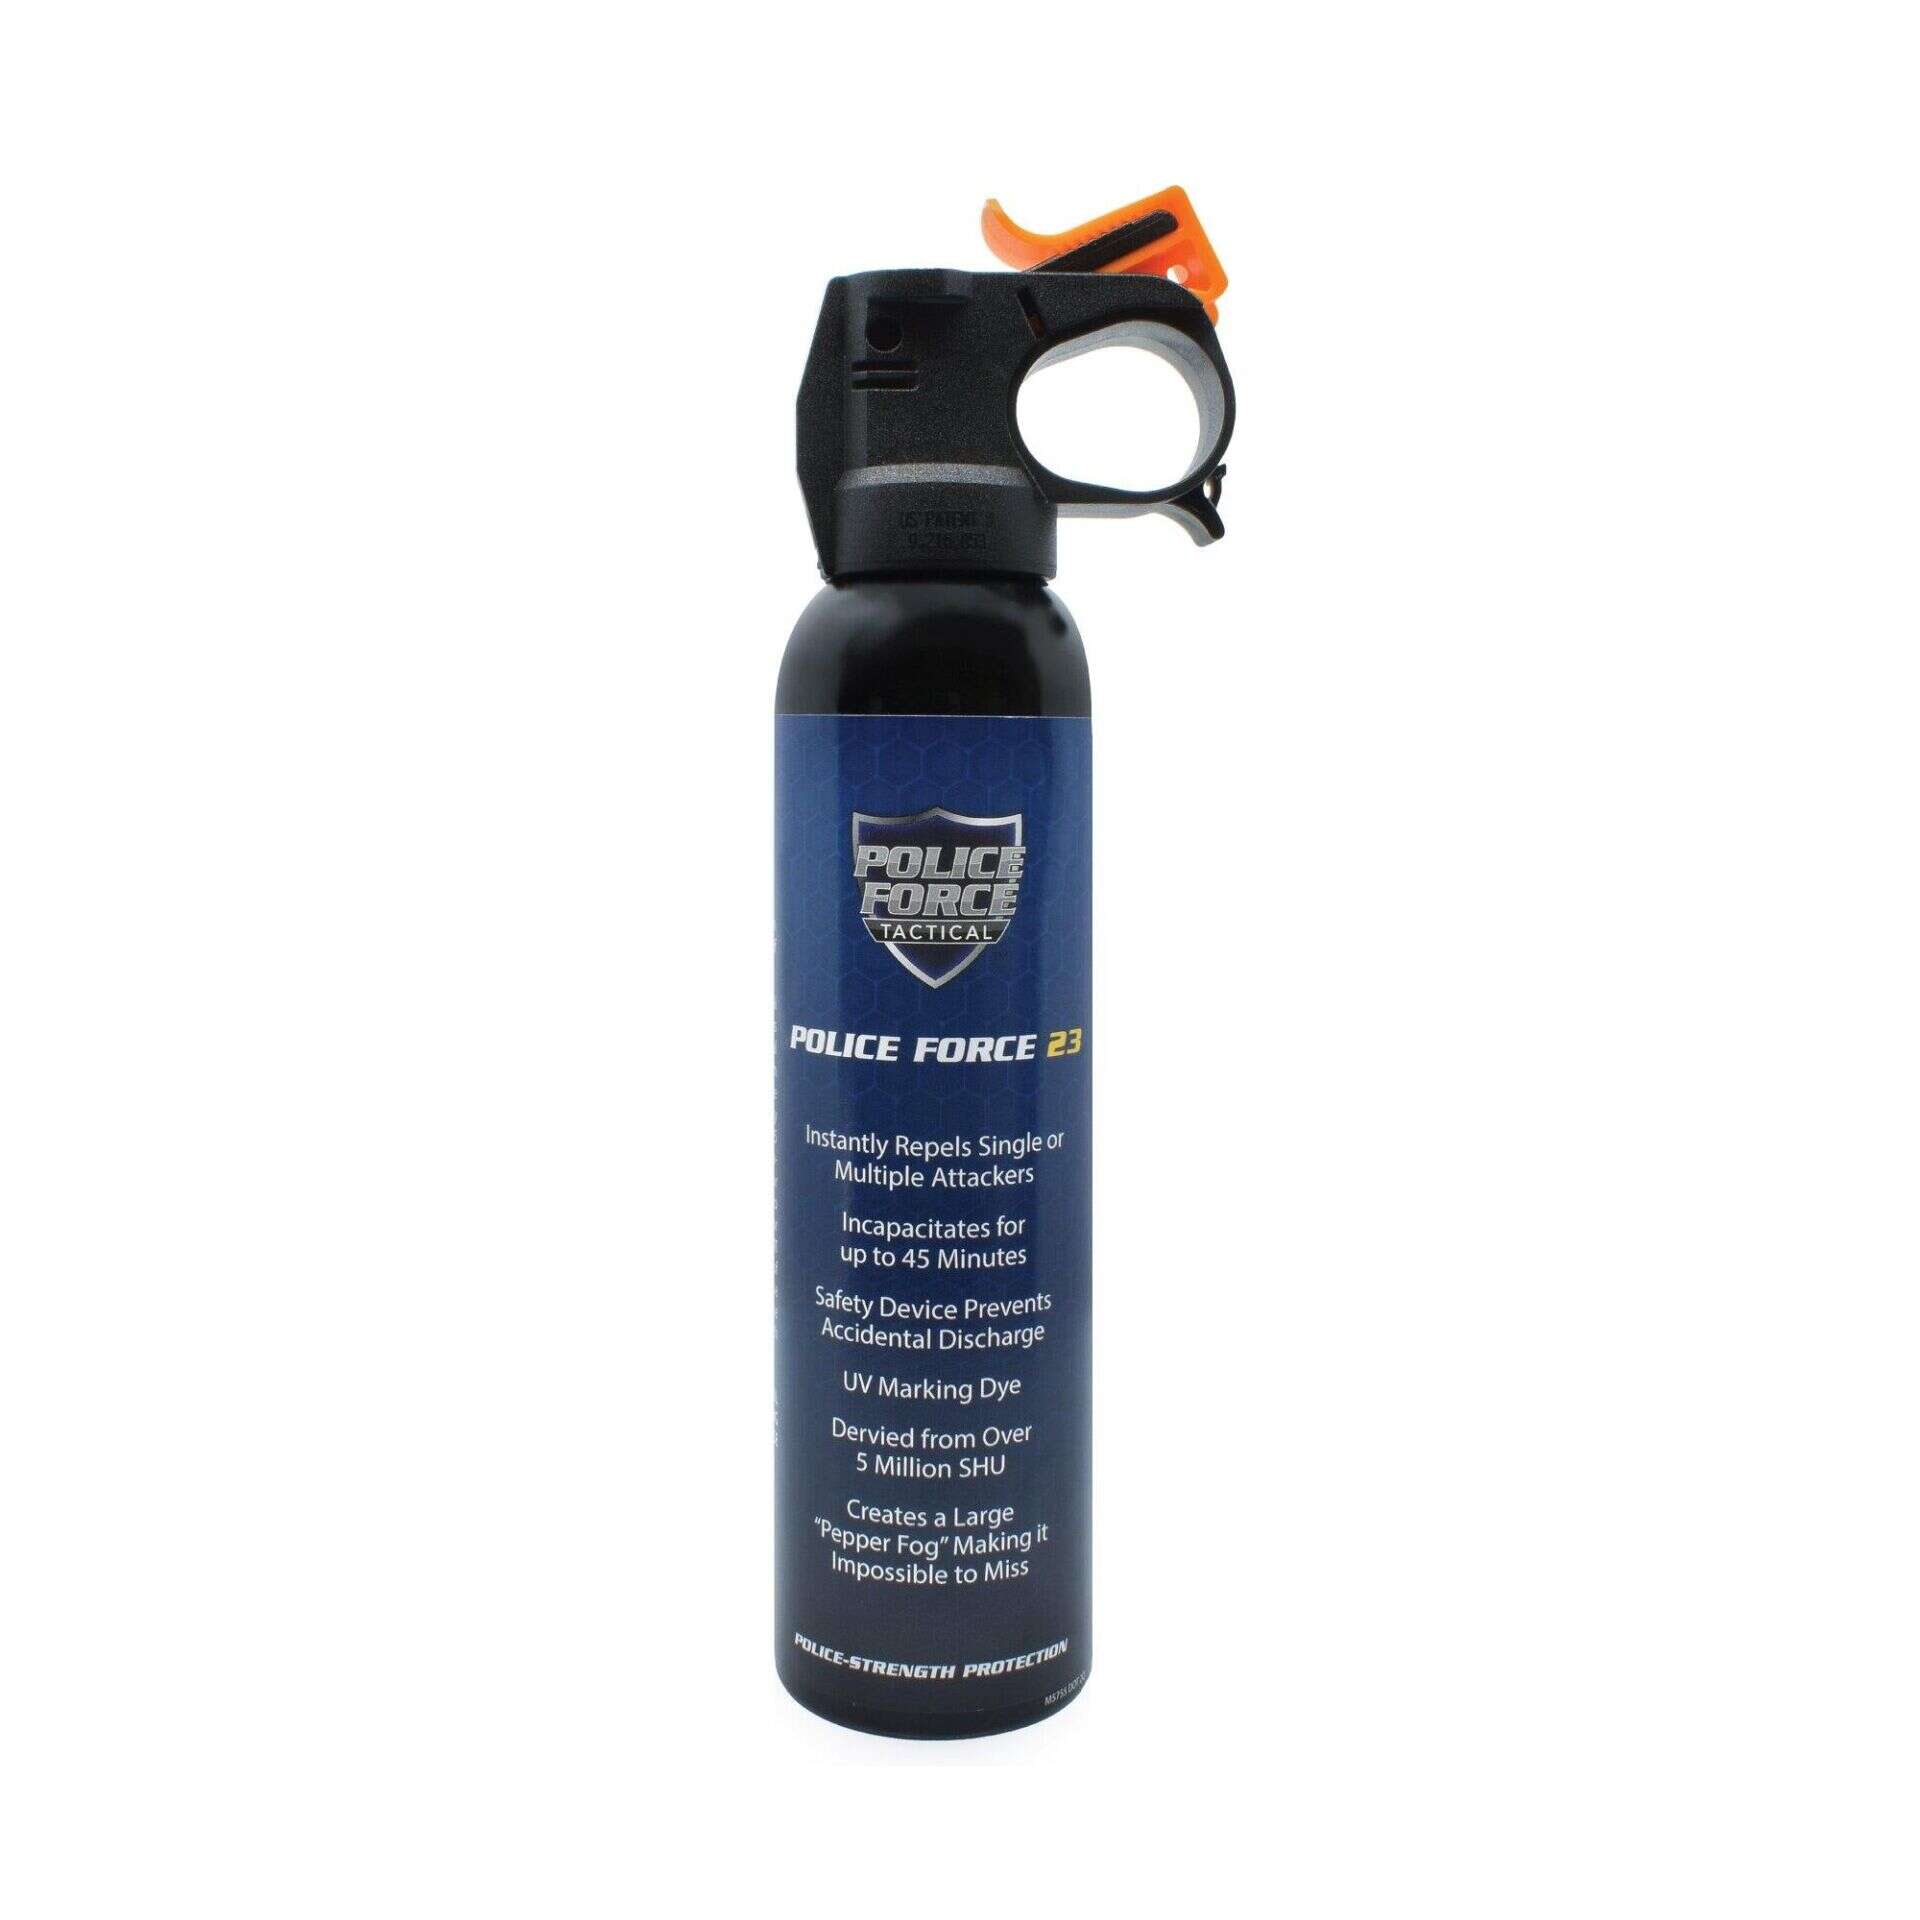 23 Fogger Pepper Spray 9 oz Fire Master